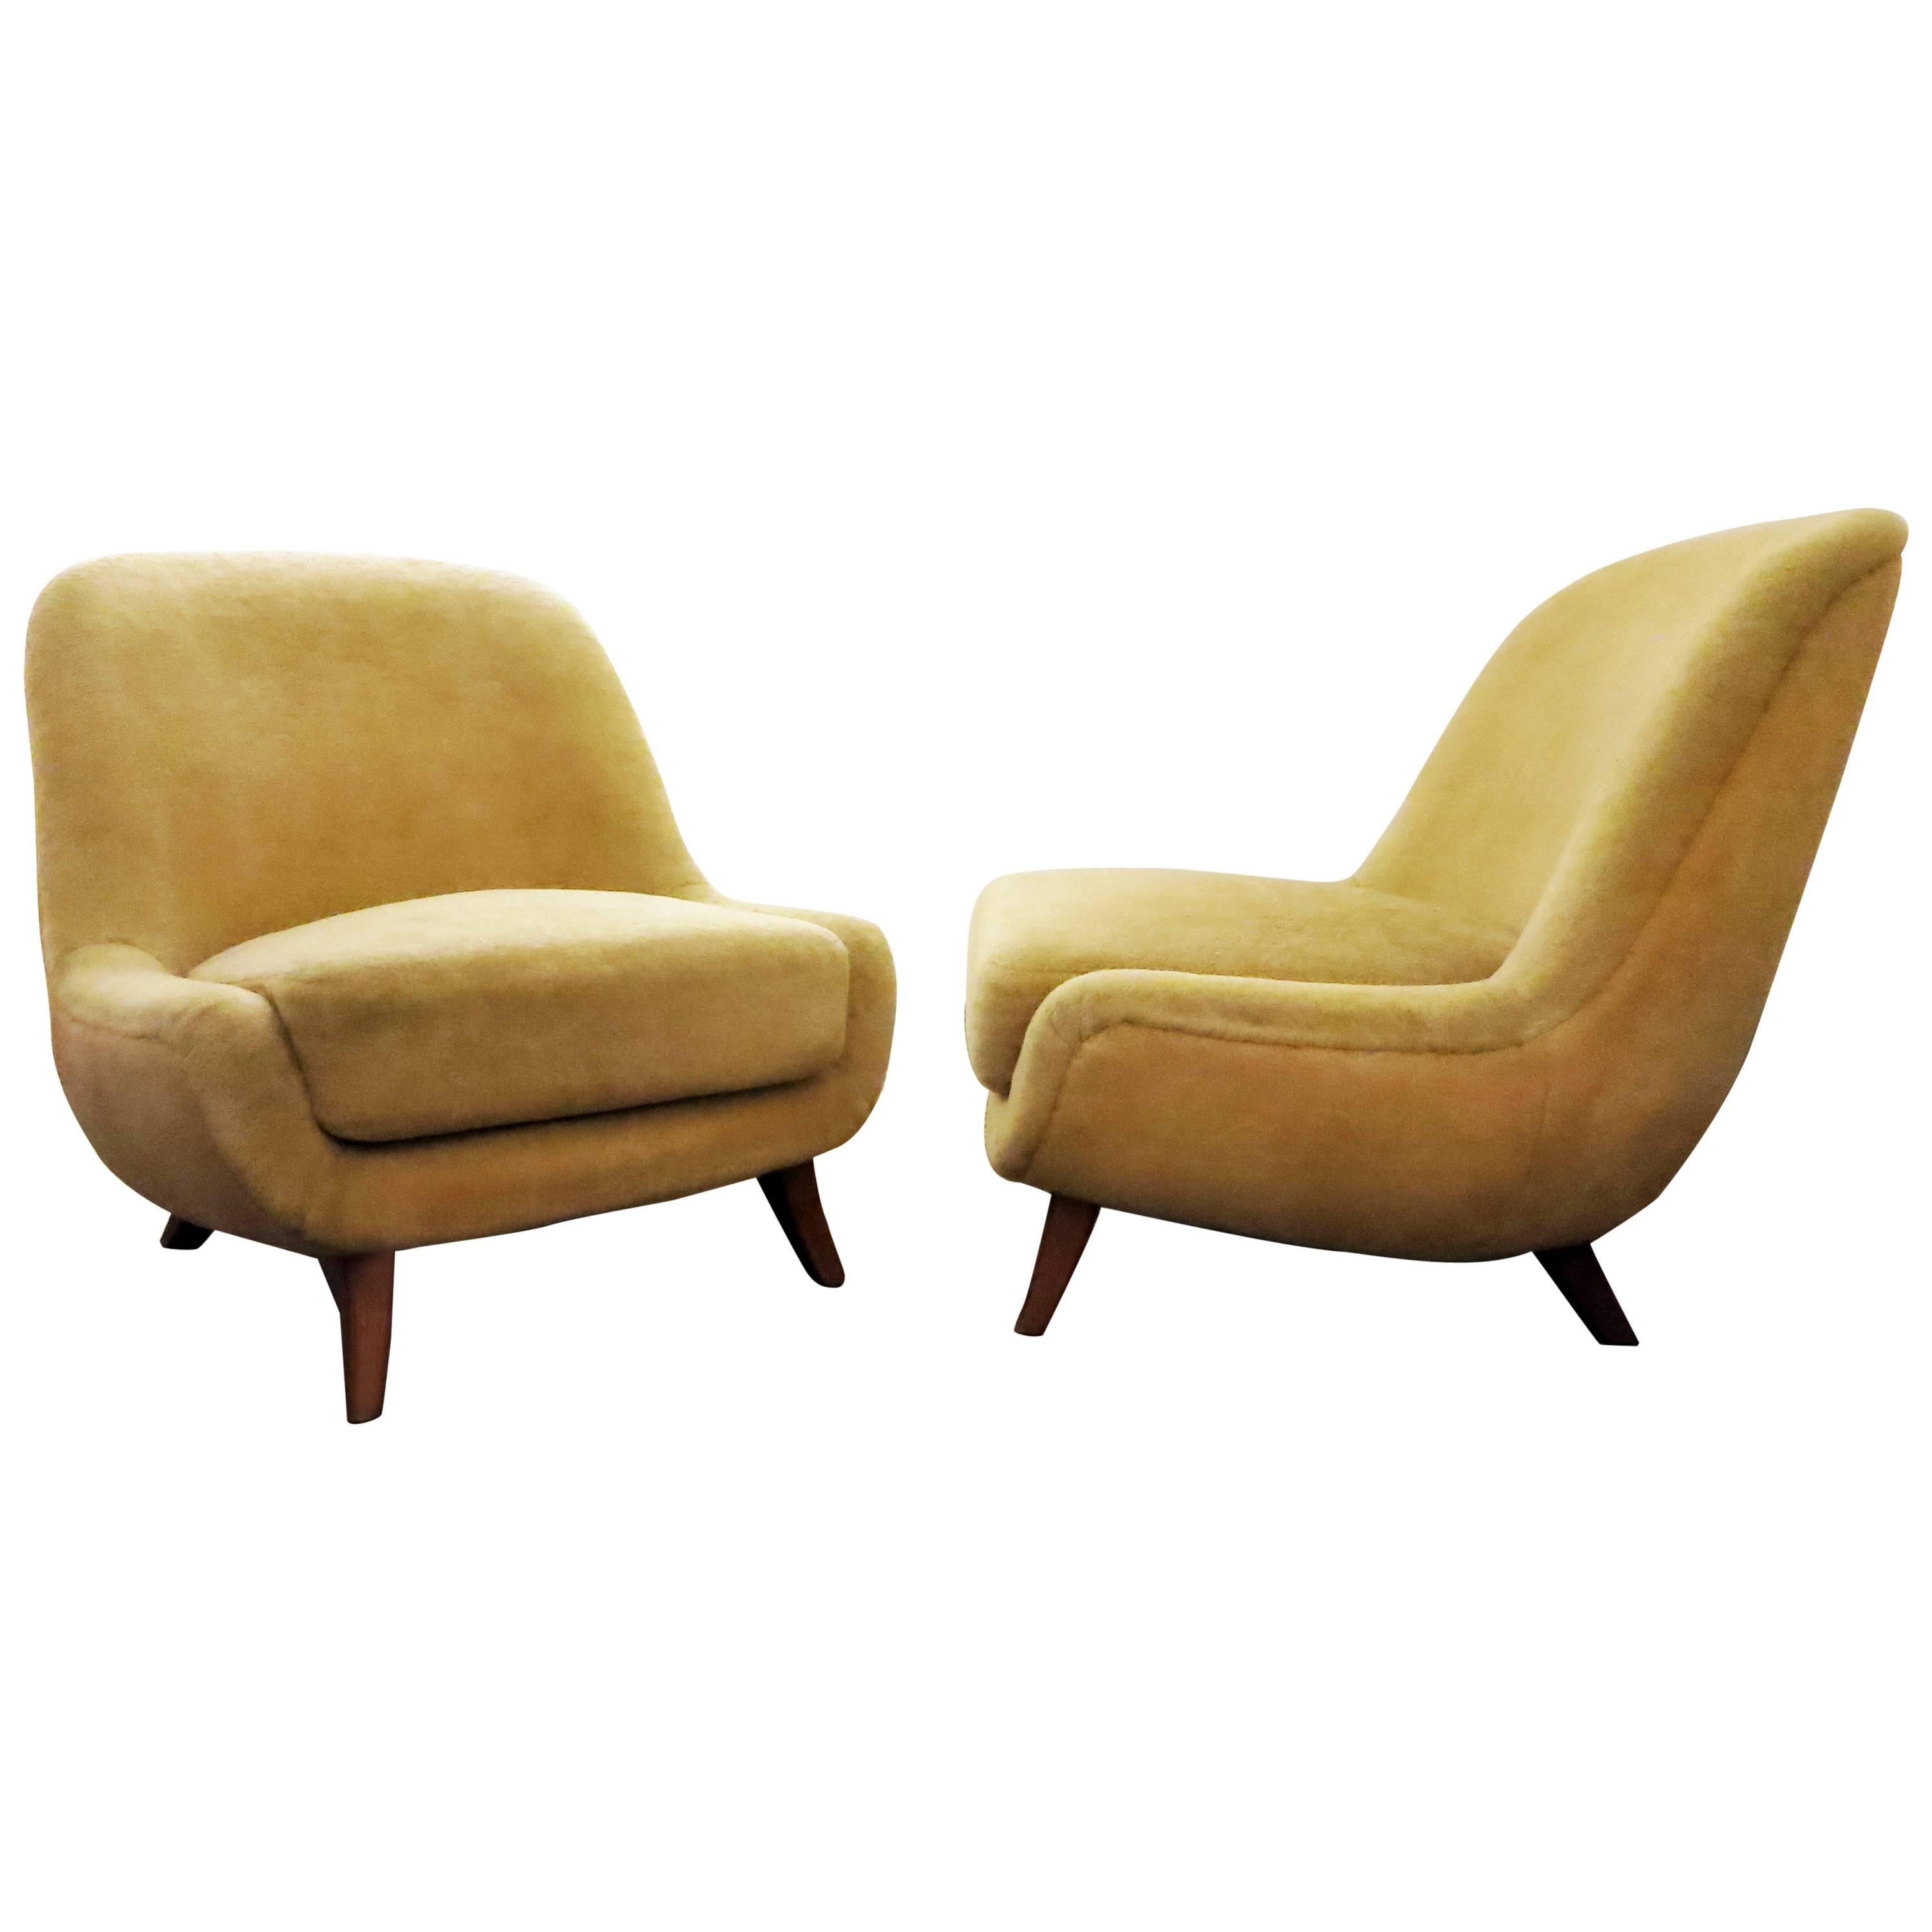 Bergmann Pair of Chairs, Germany, 1950s